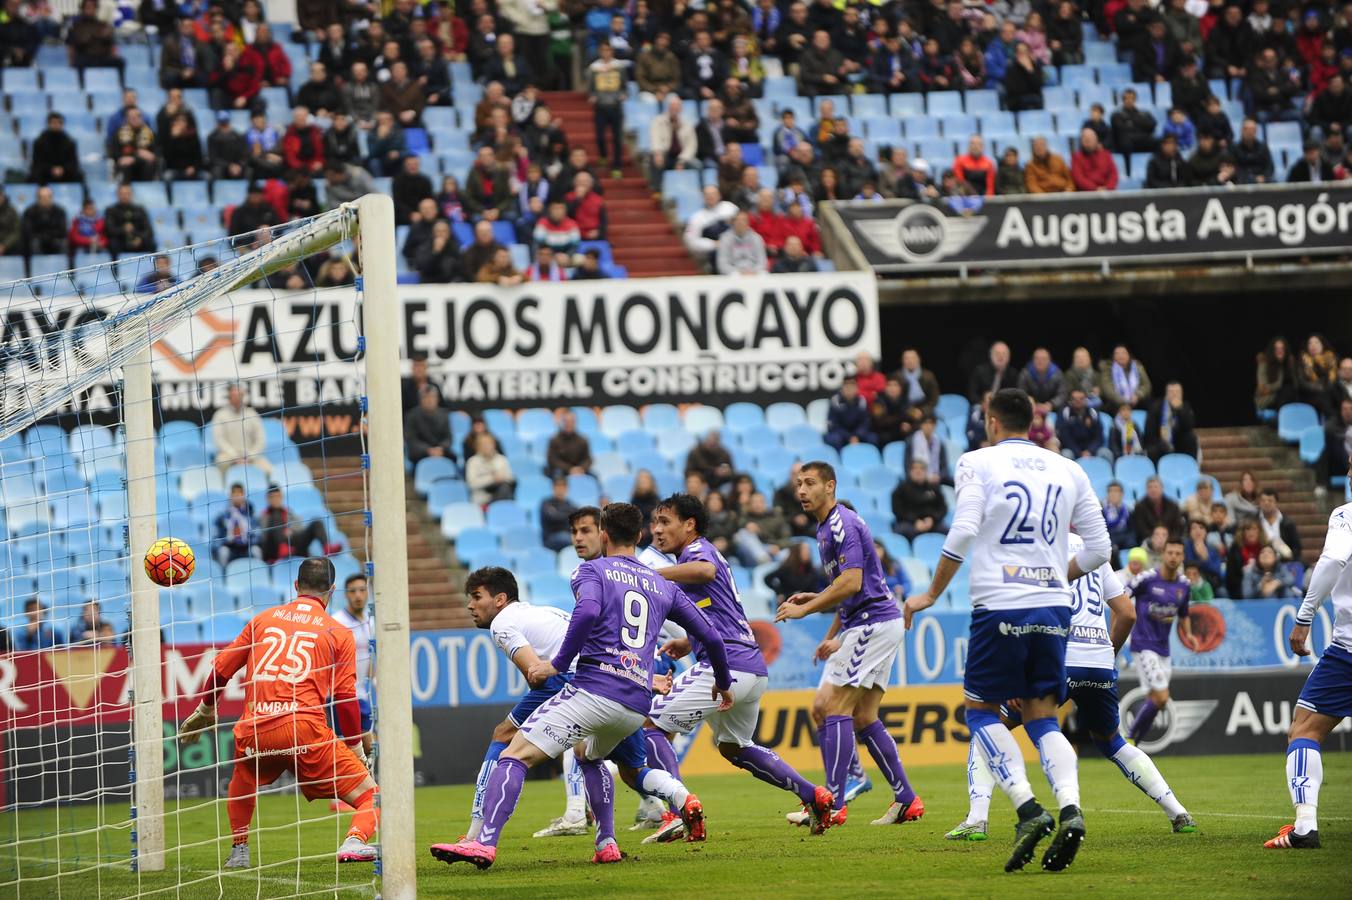 Zaragoza 0-2 Real Valladolid